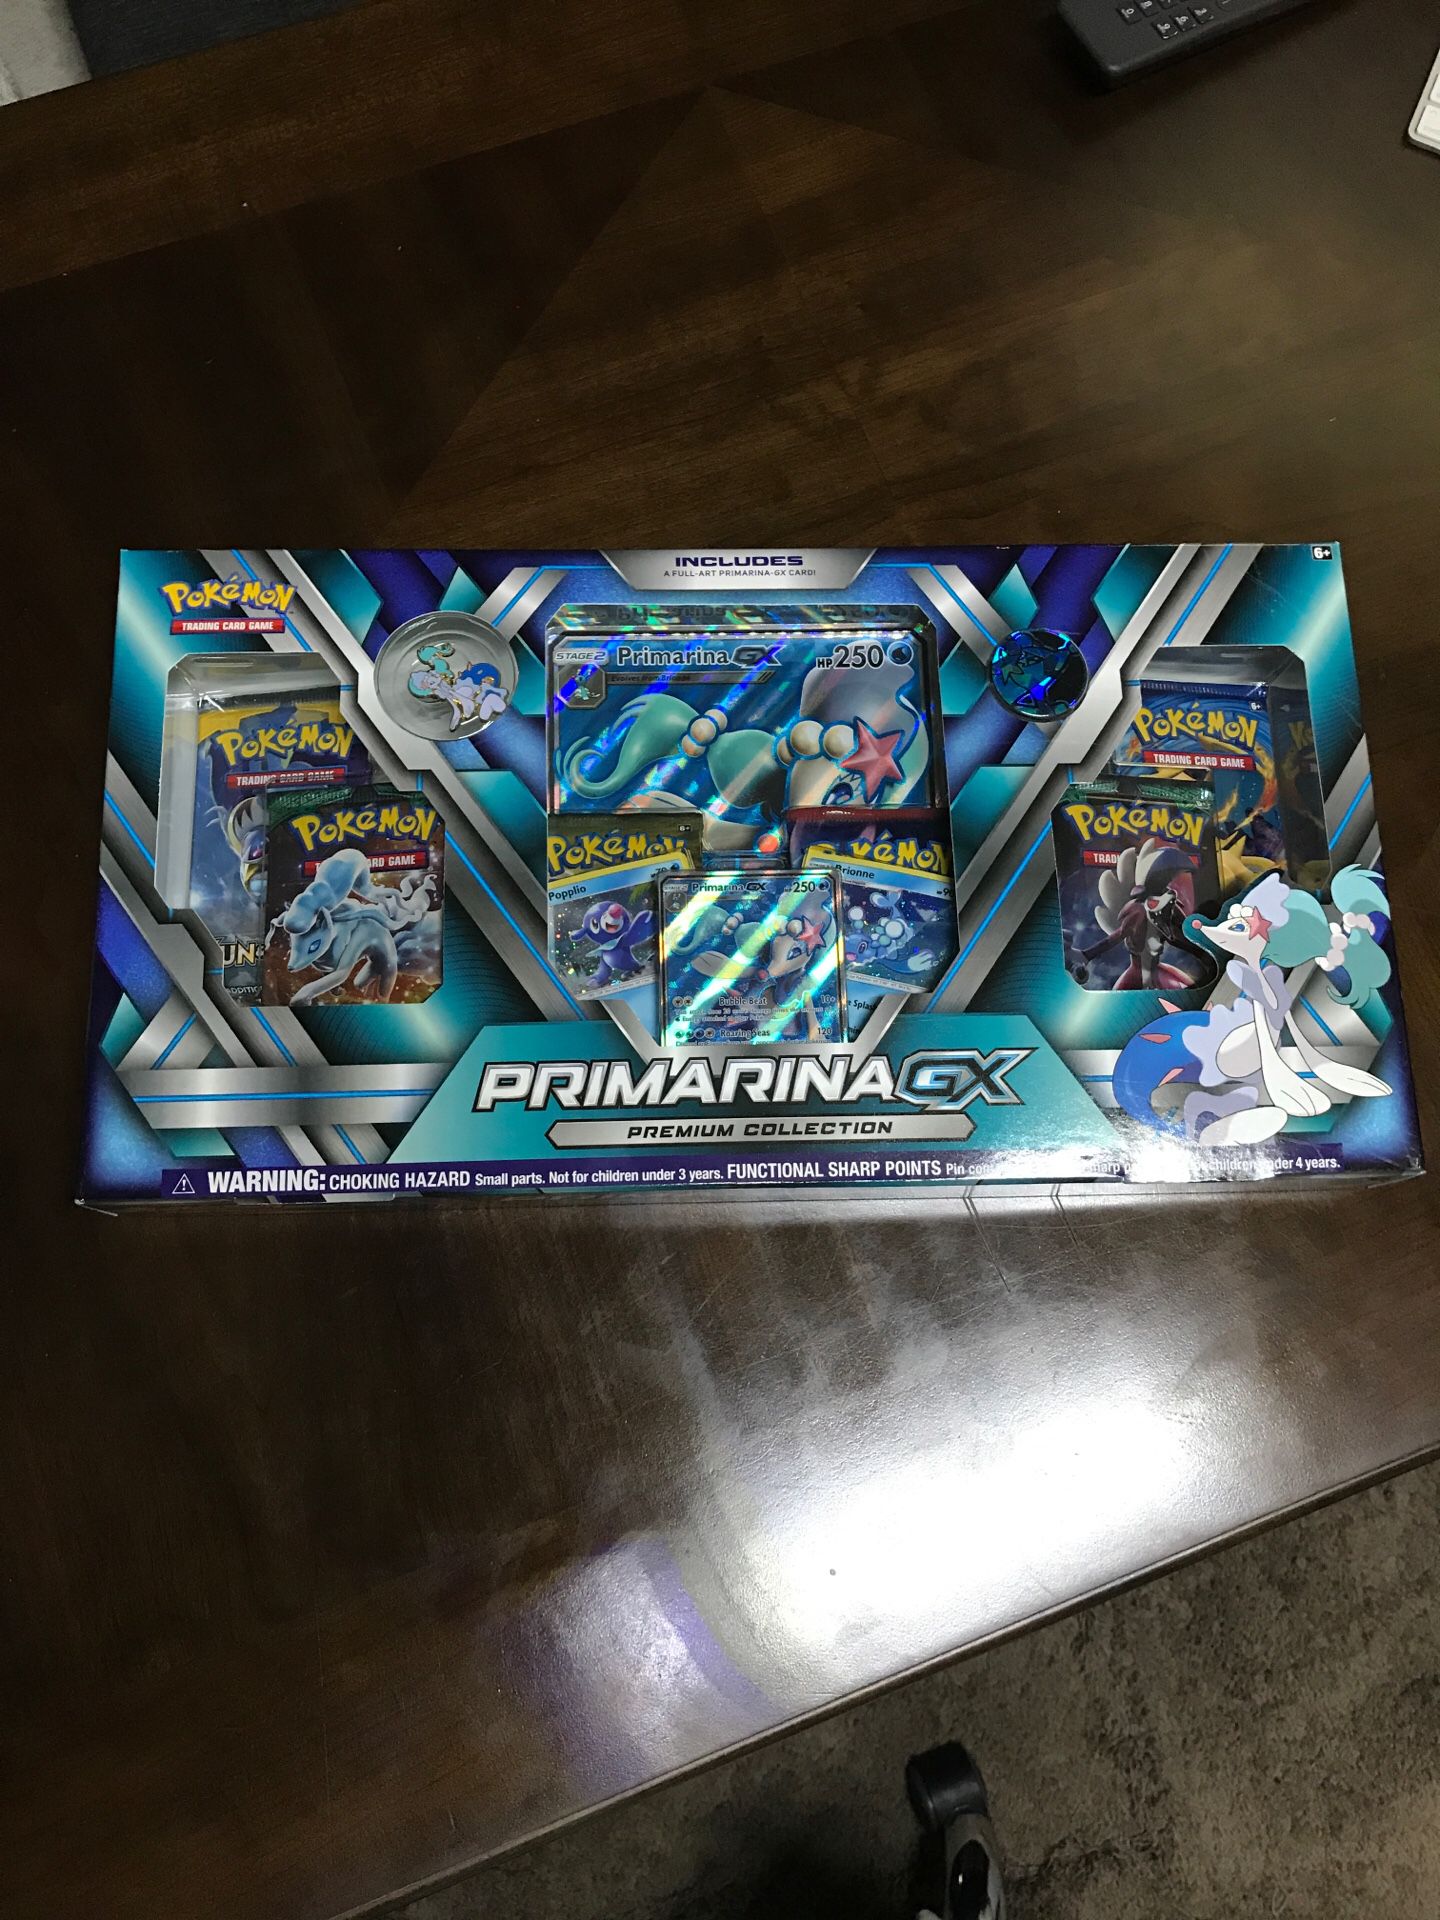 Pokemon PrimarinaGX Premium box